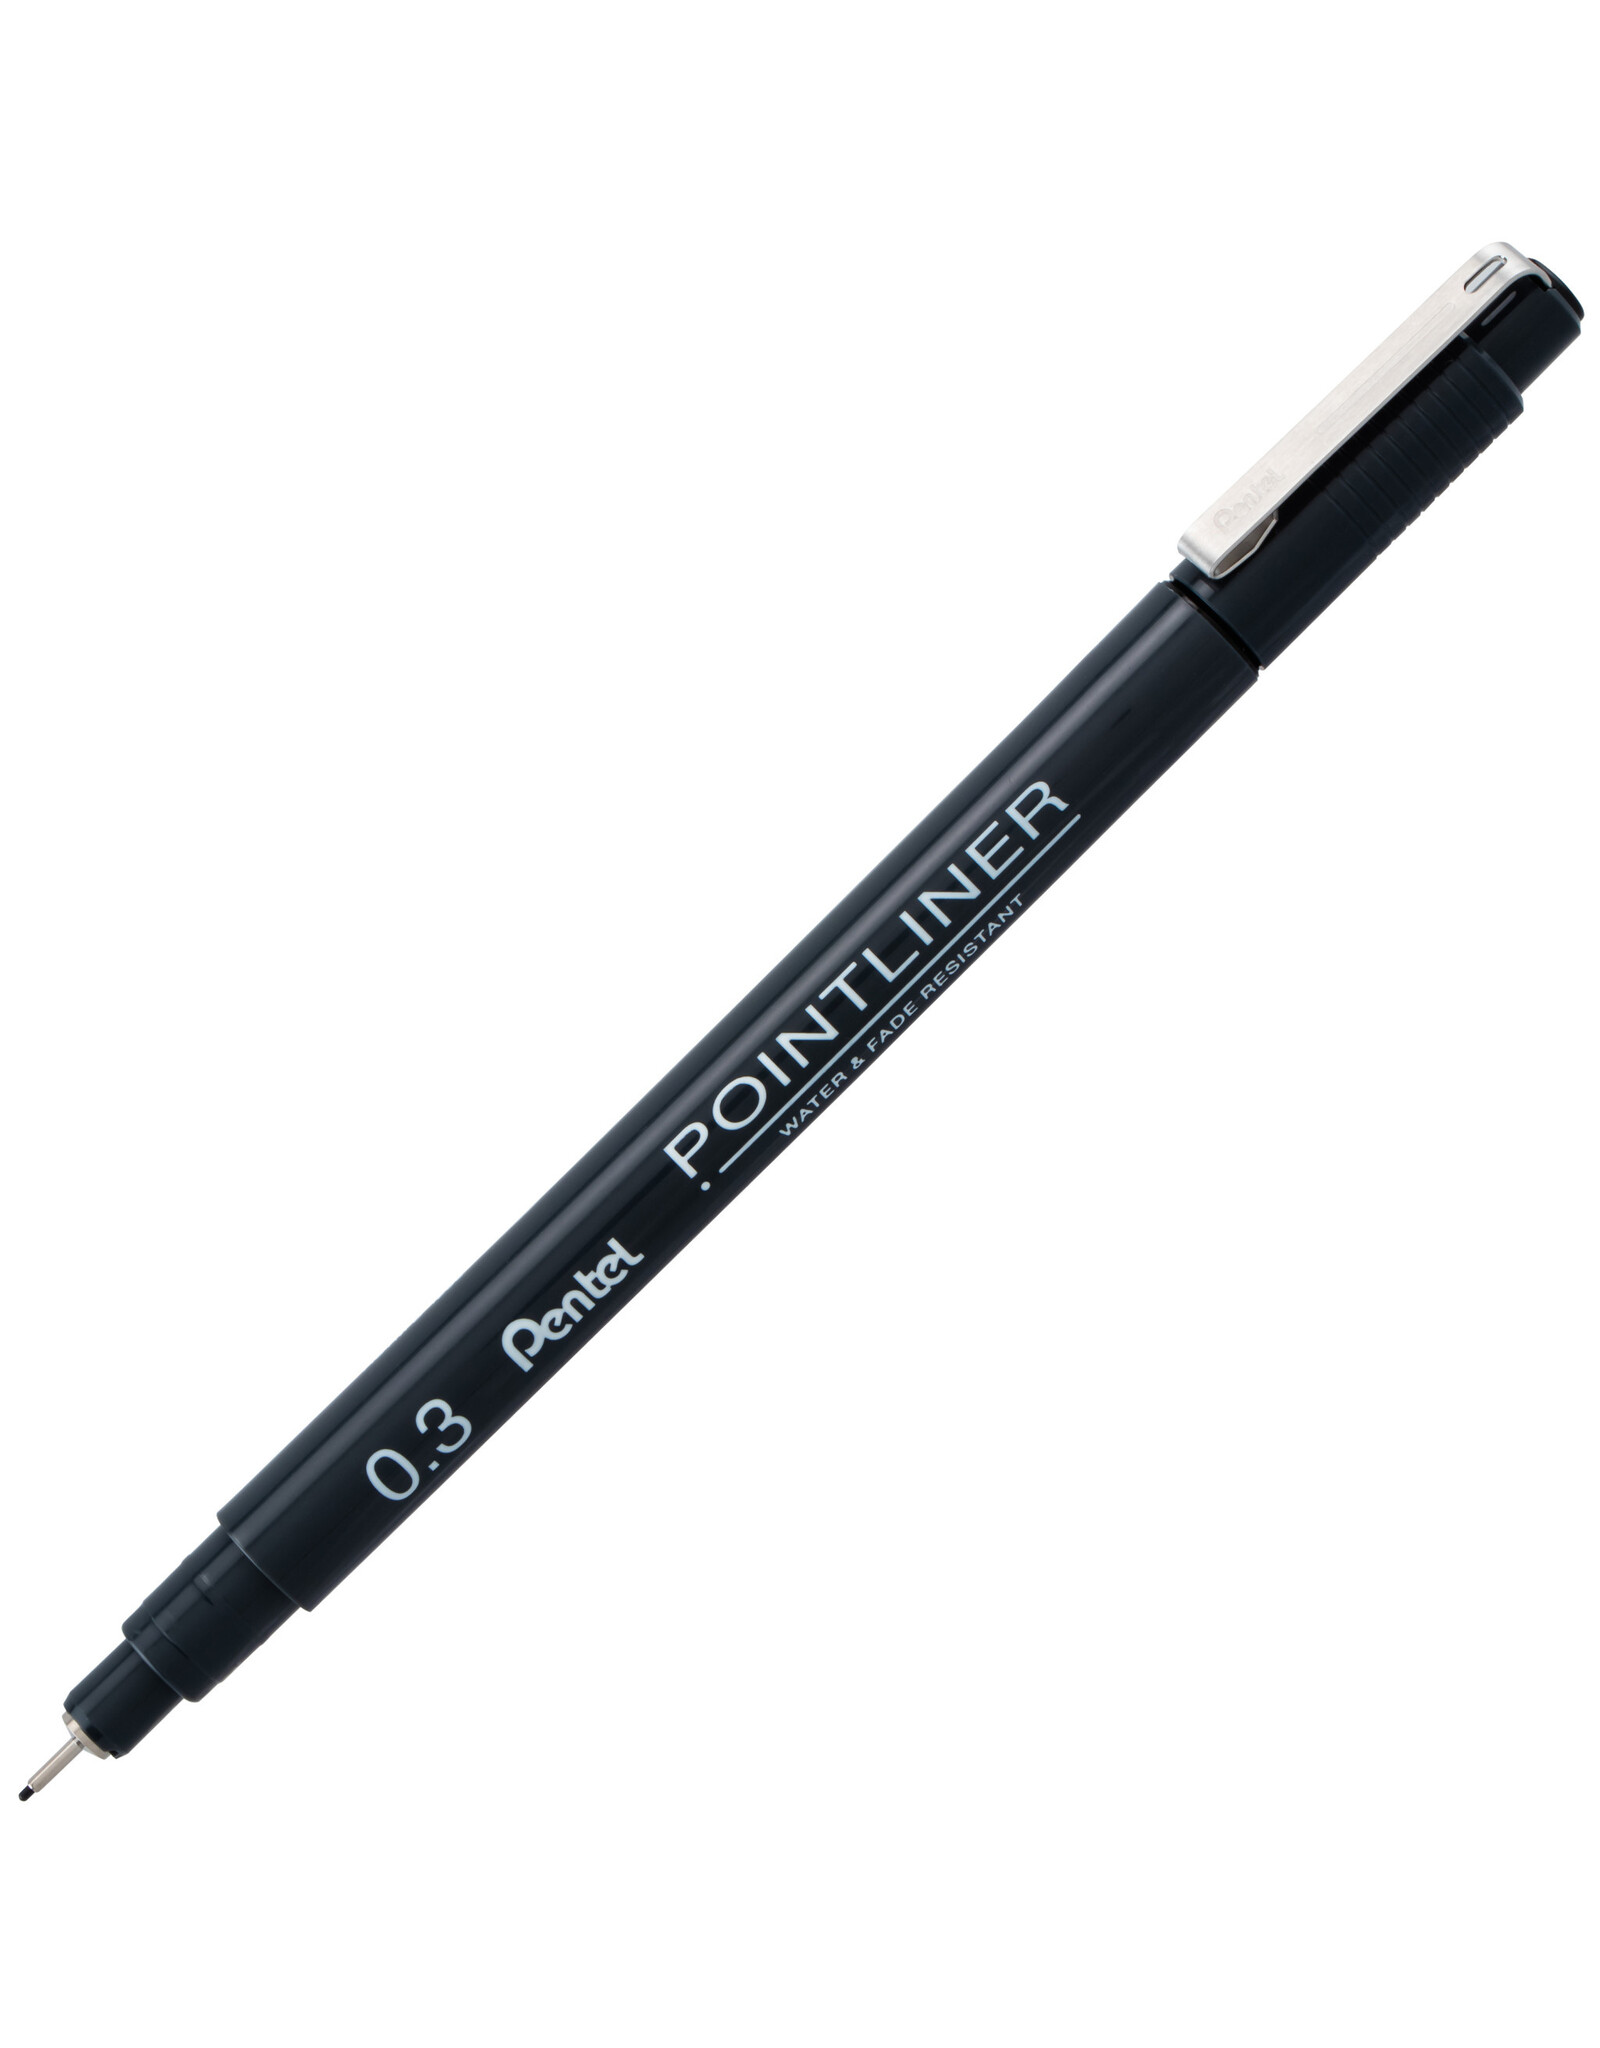 Pentel Pentel Arts Pointliner Pen, 0.3mm, Black